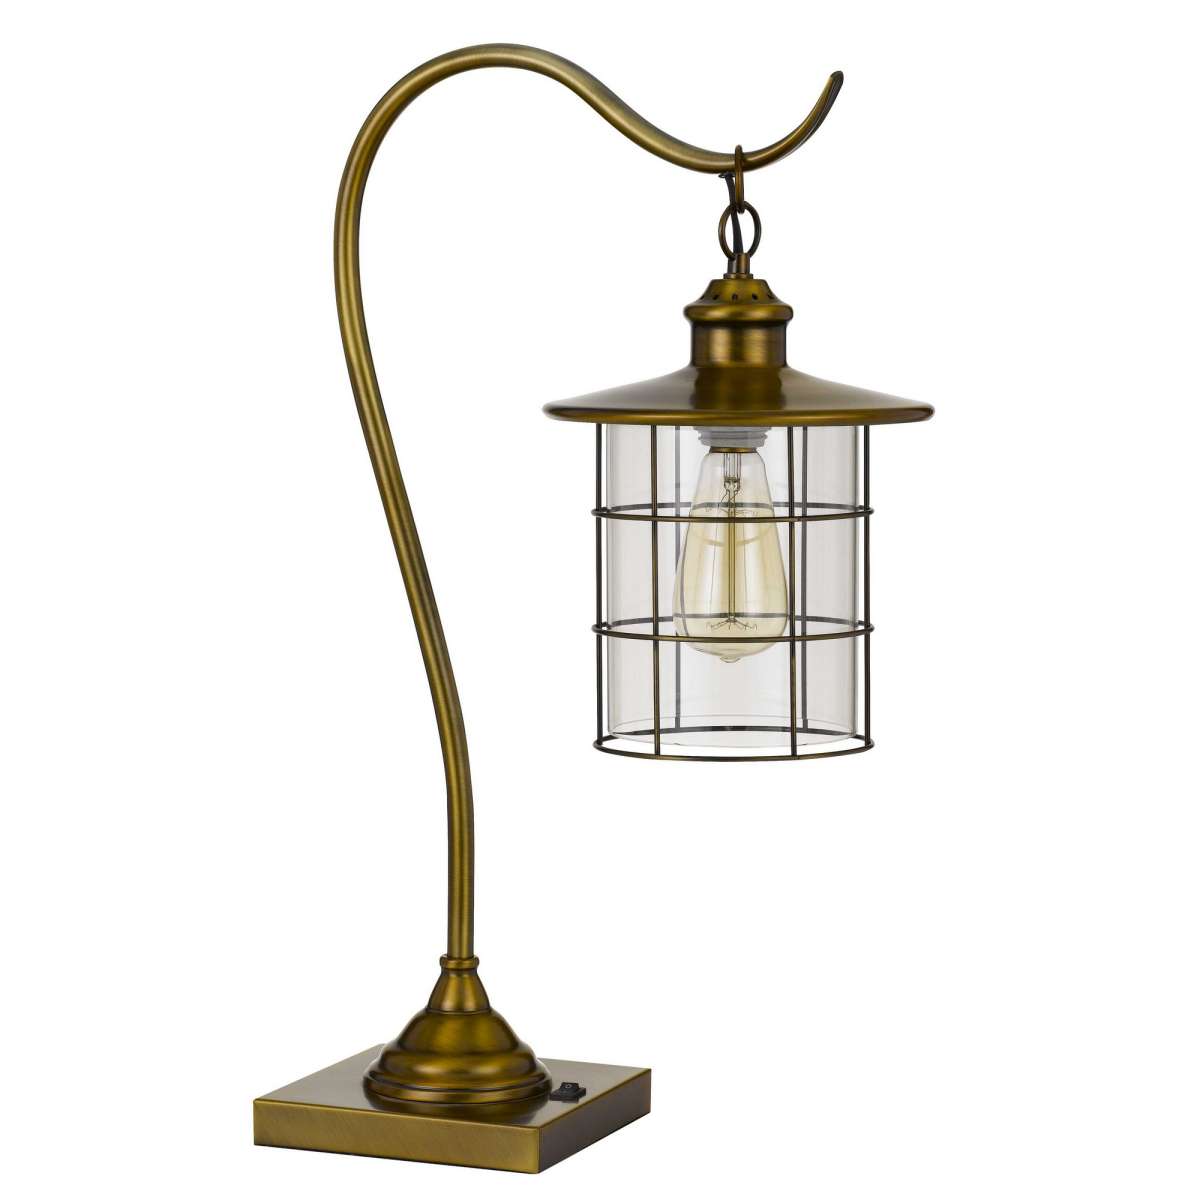 25 Inch Metal Downbridge Design Desk Lamp With Caged Shade, Antique Brass By Benzara